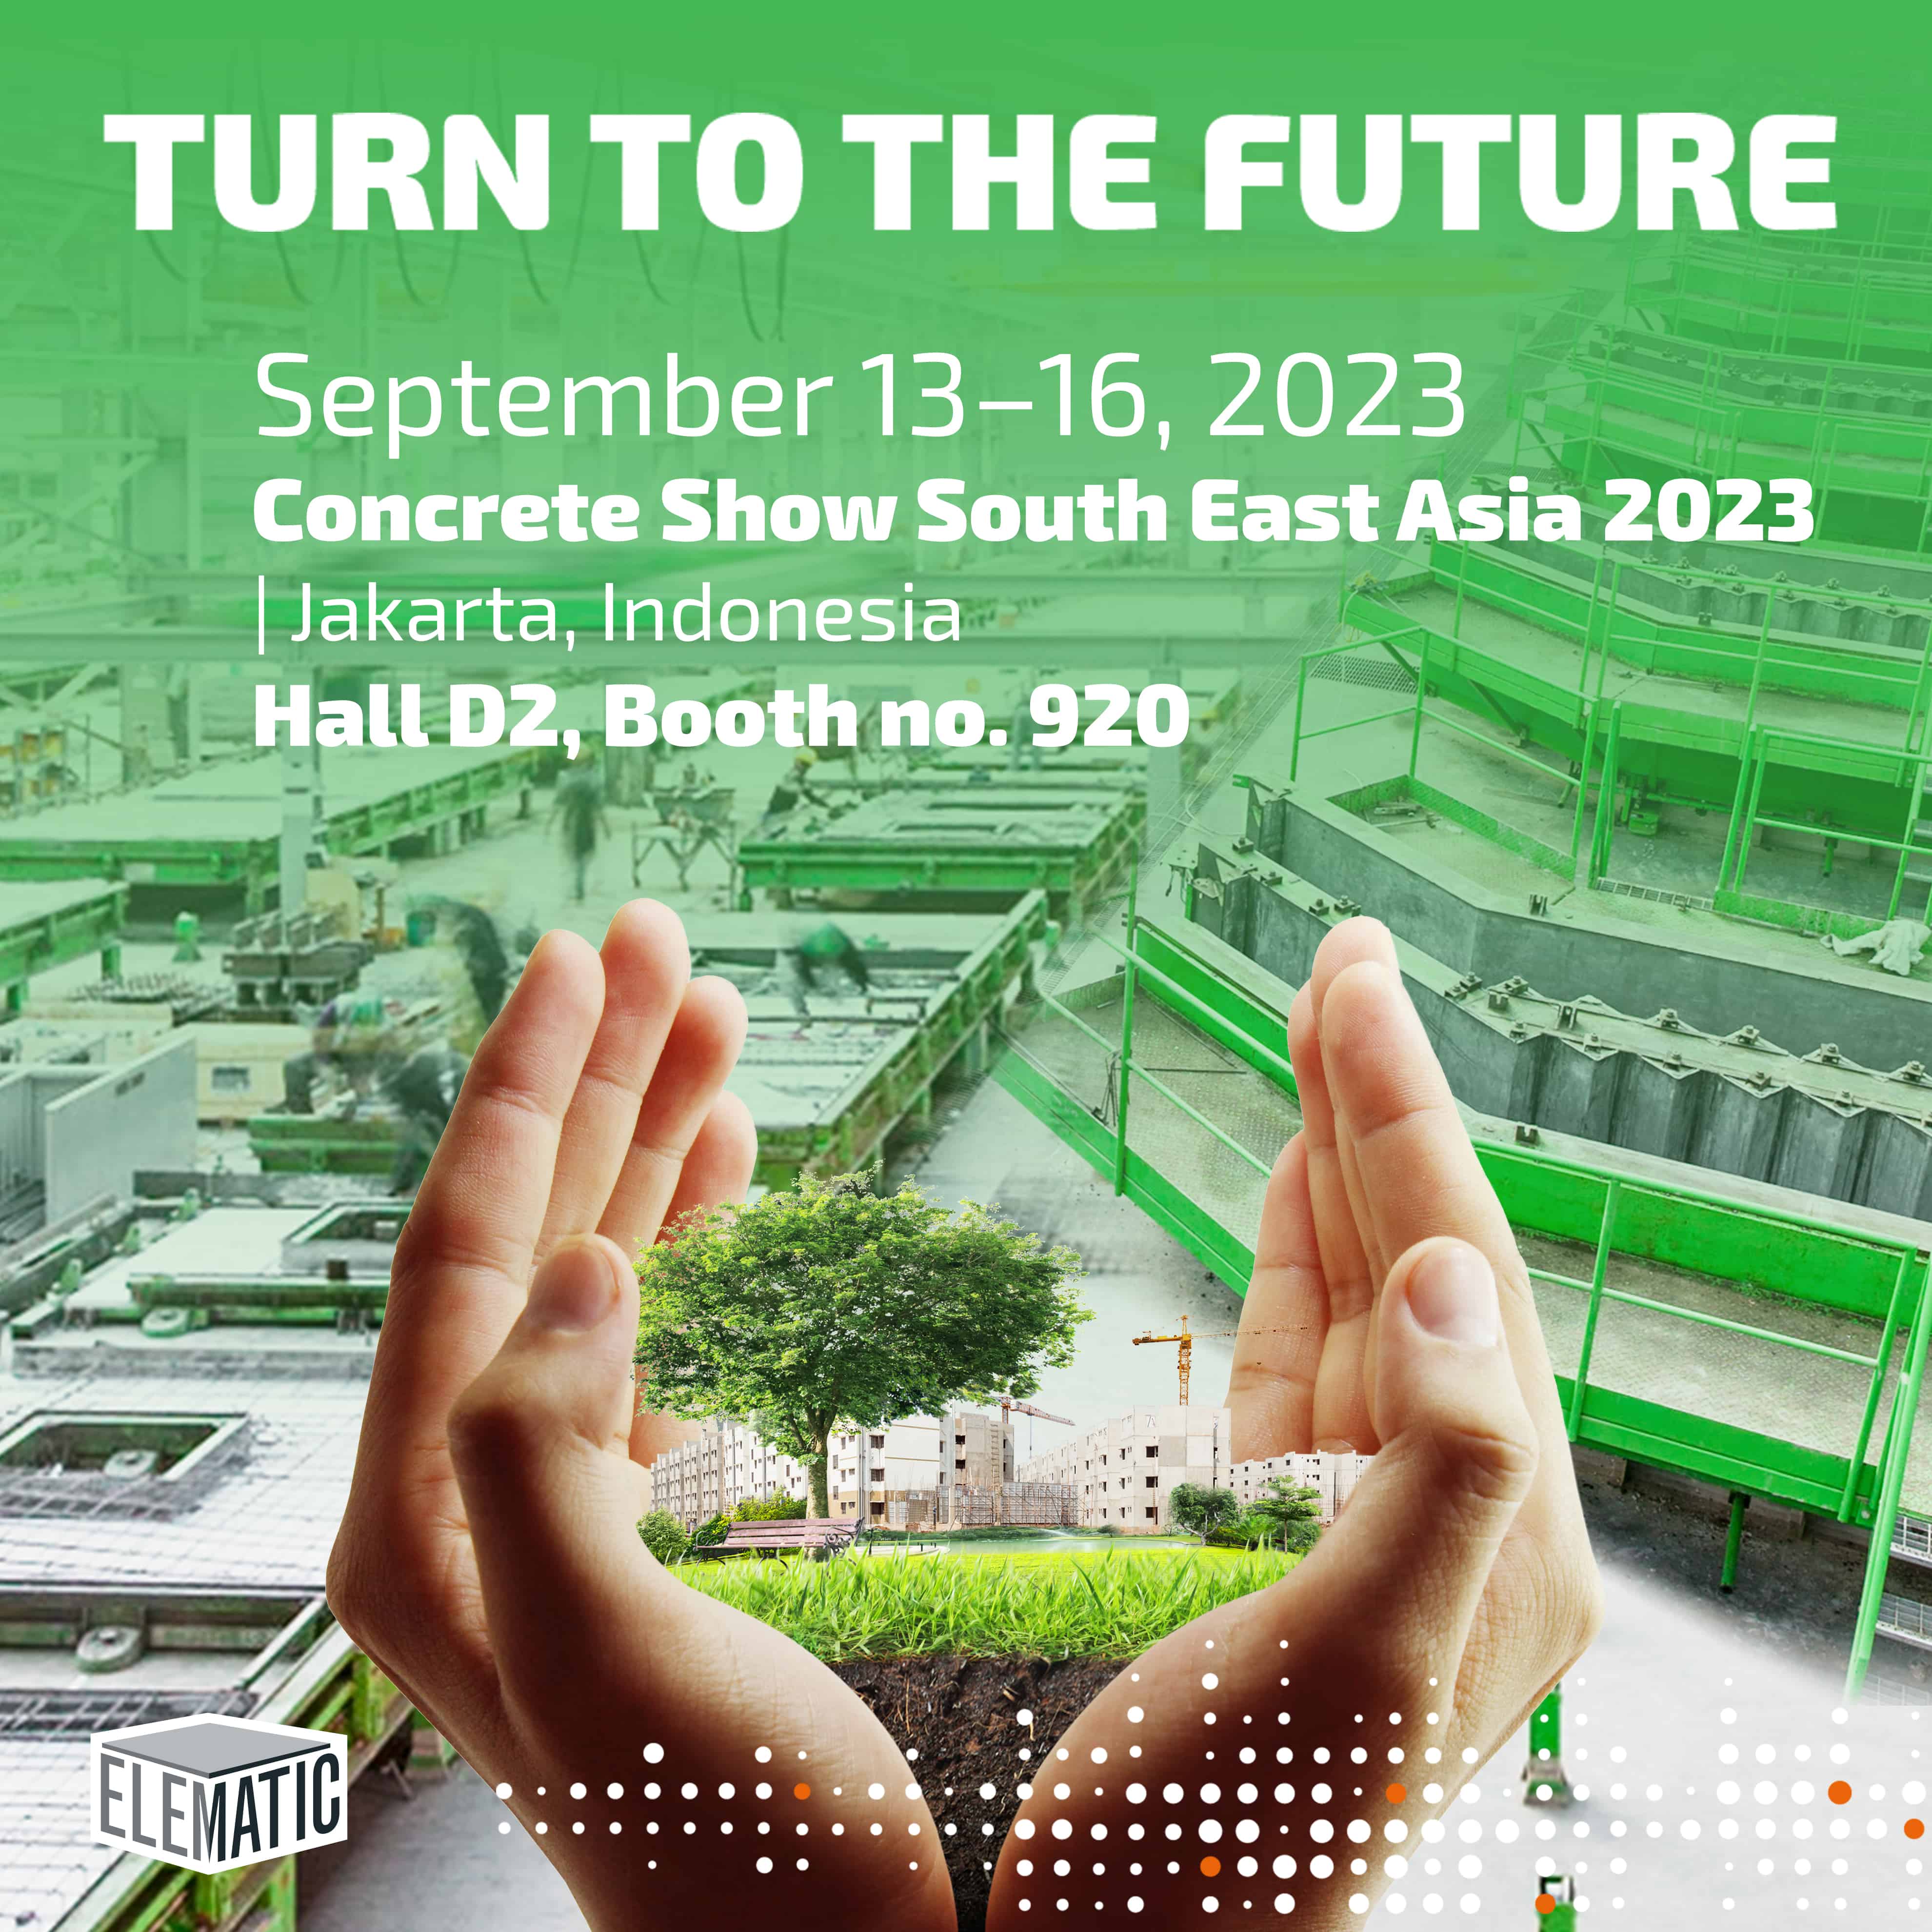 Concrete Show South East Asia 2023